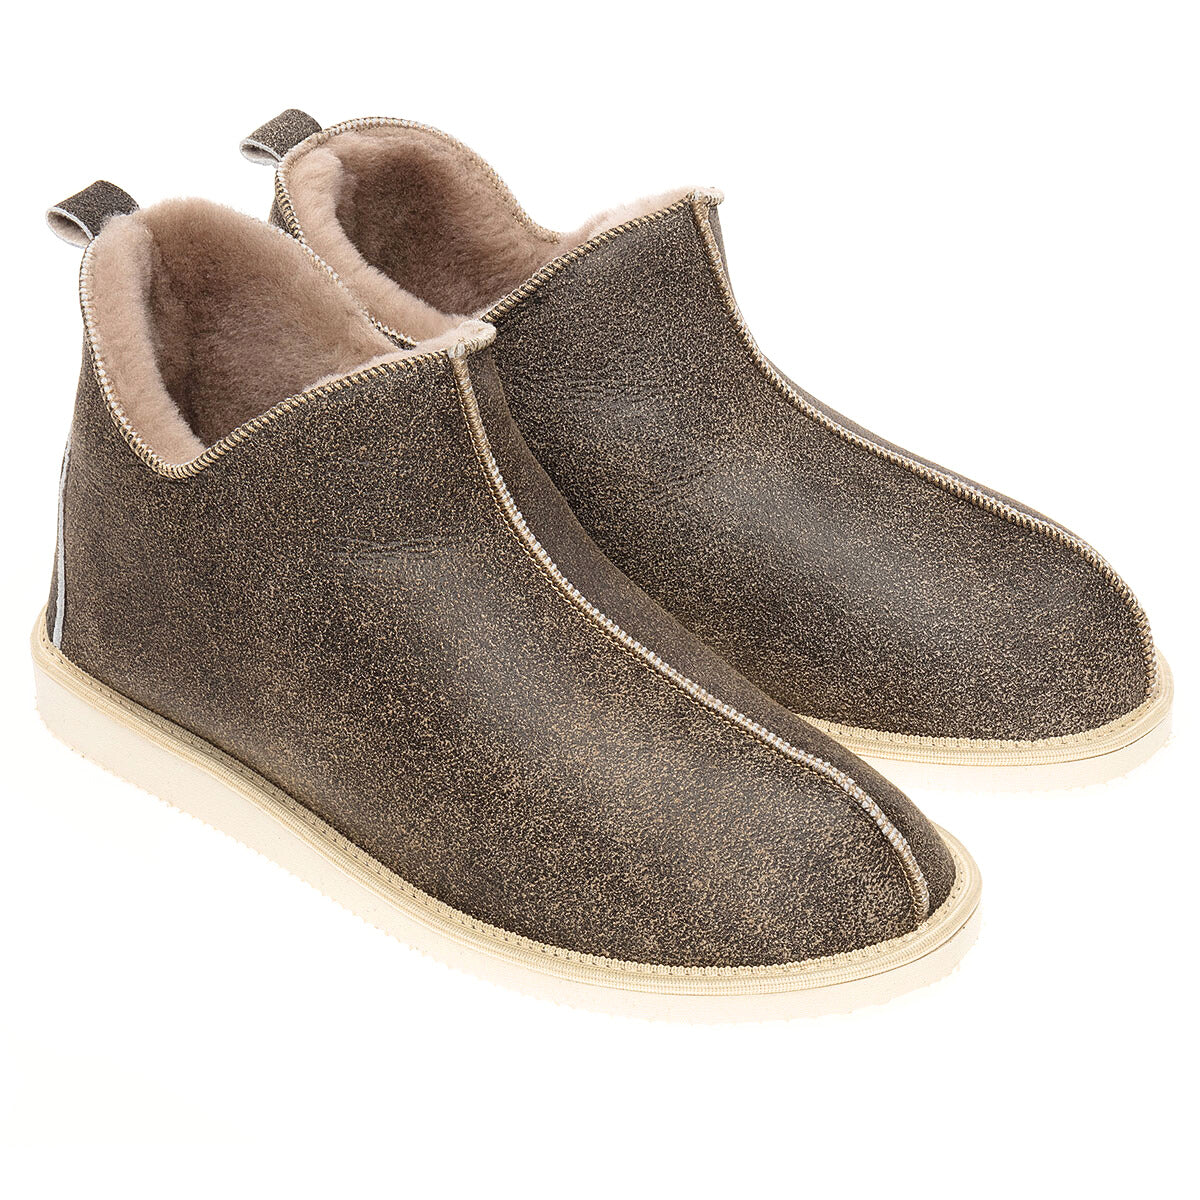 Alpin Sheepskin Slippers - Nutmeg Distressed Leather